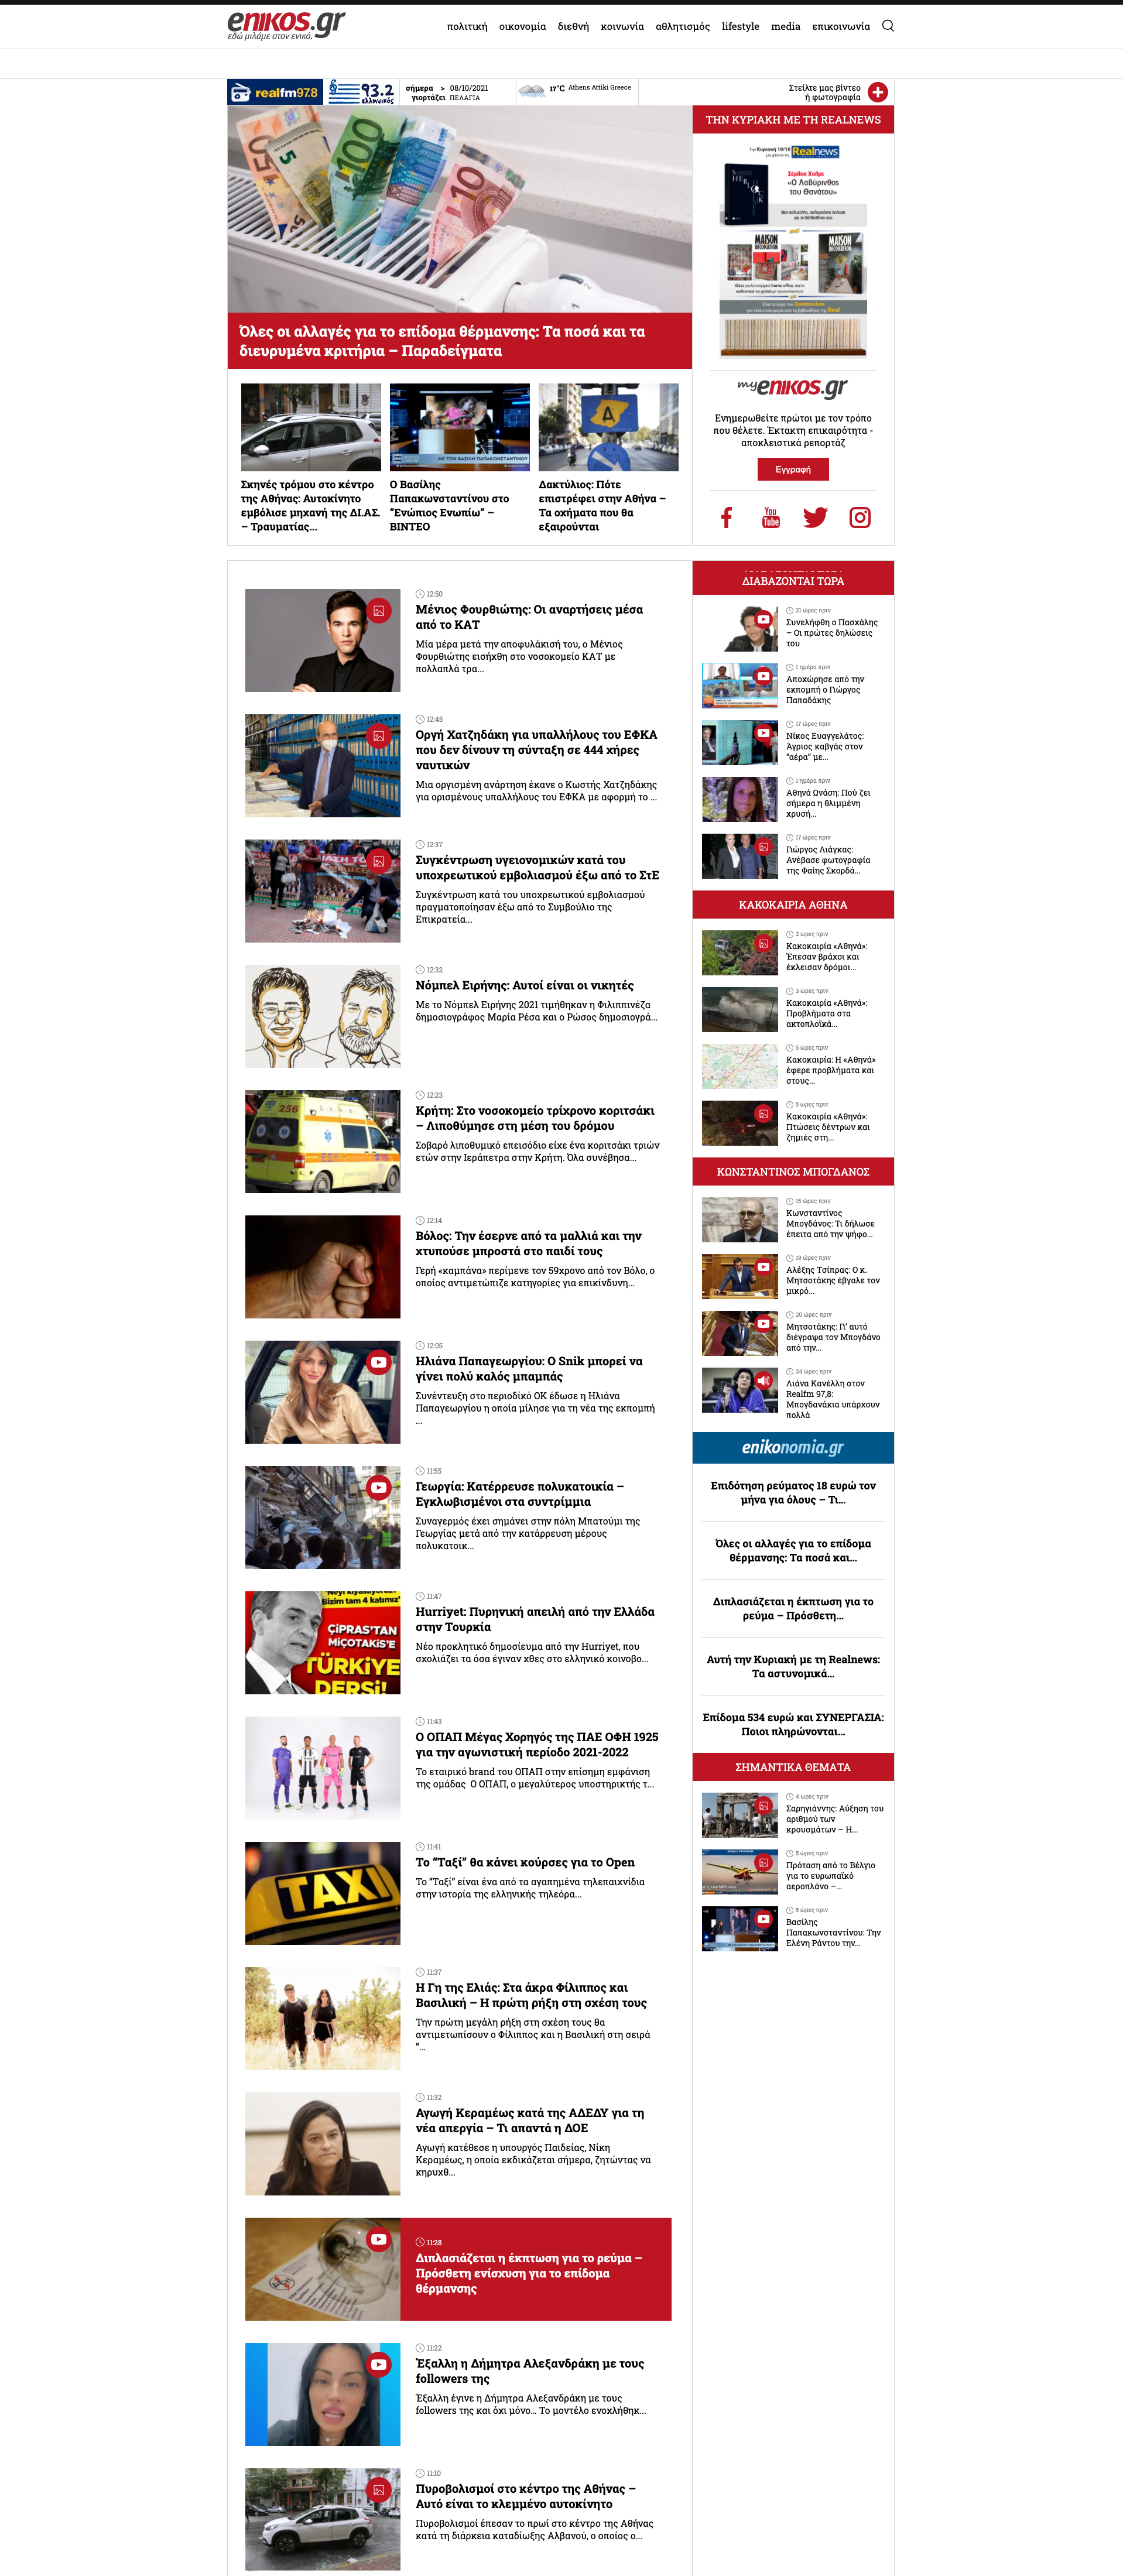 redesign of a news blog website